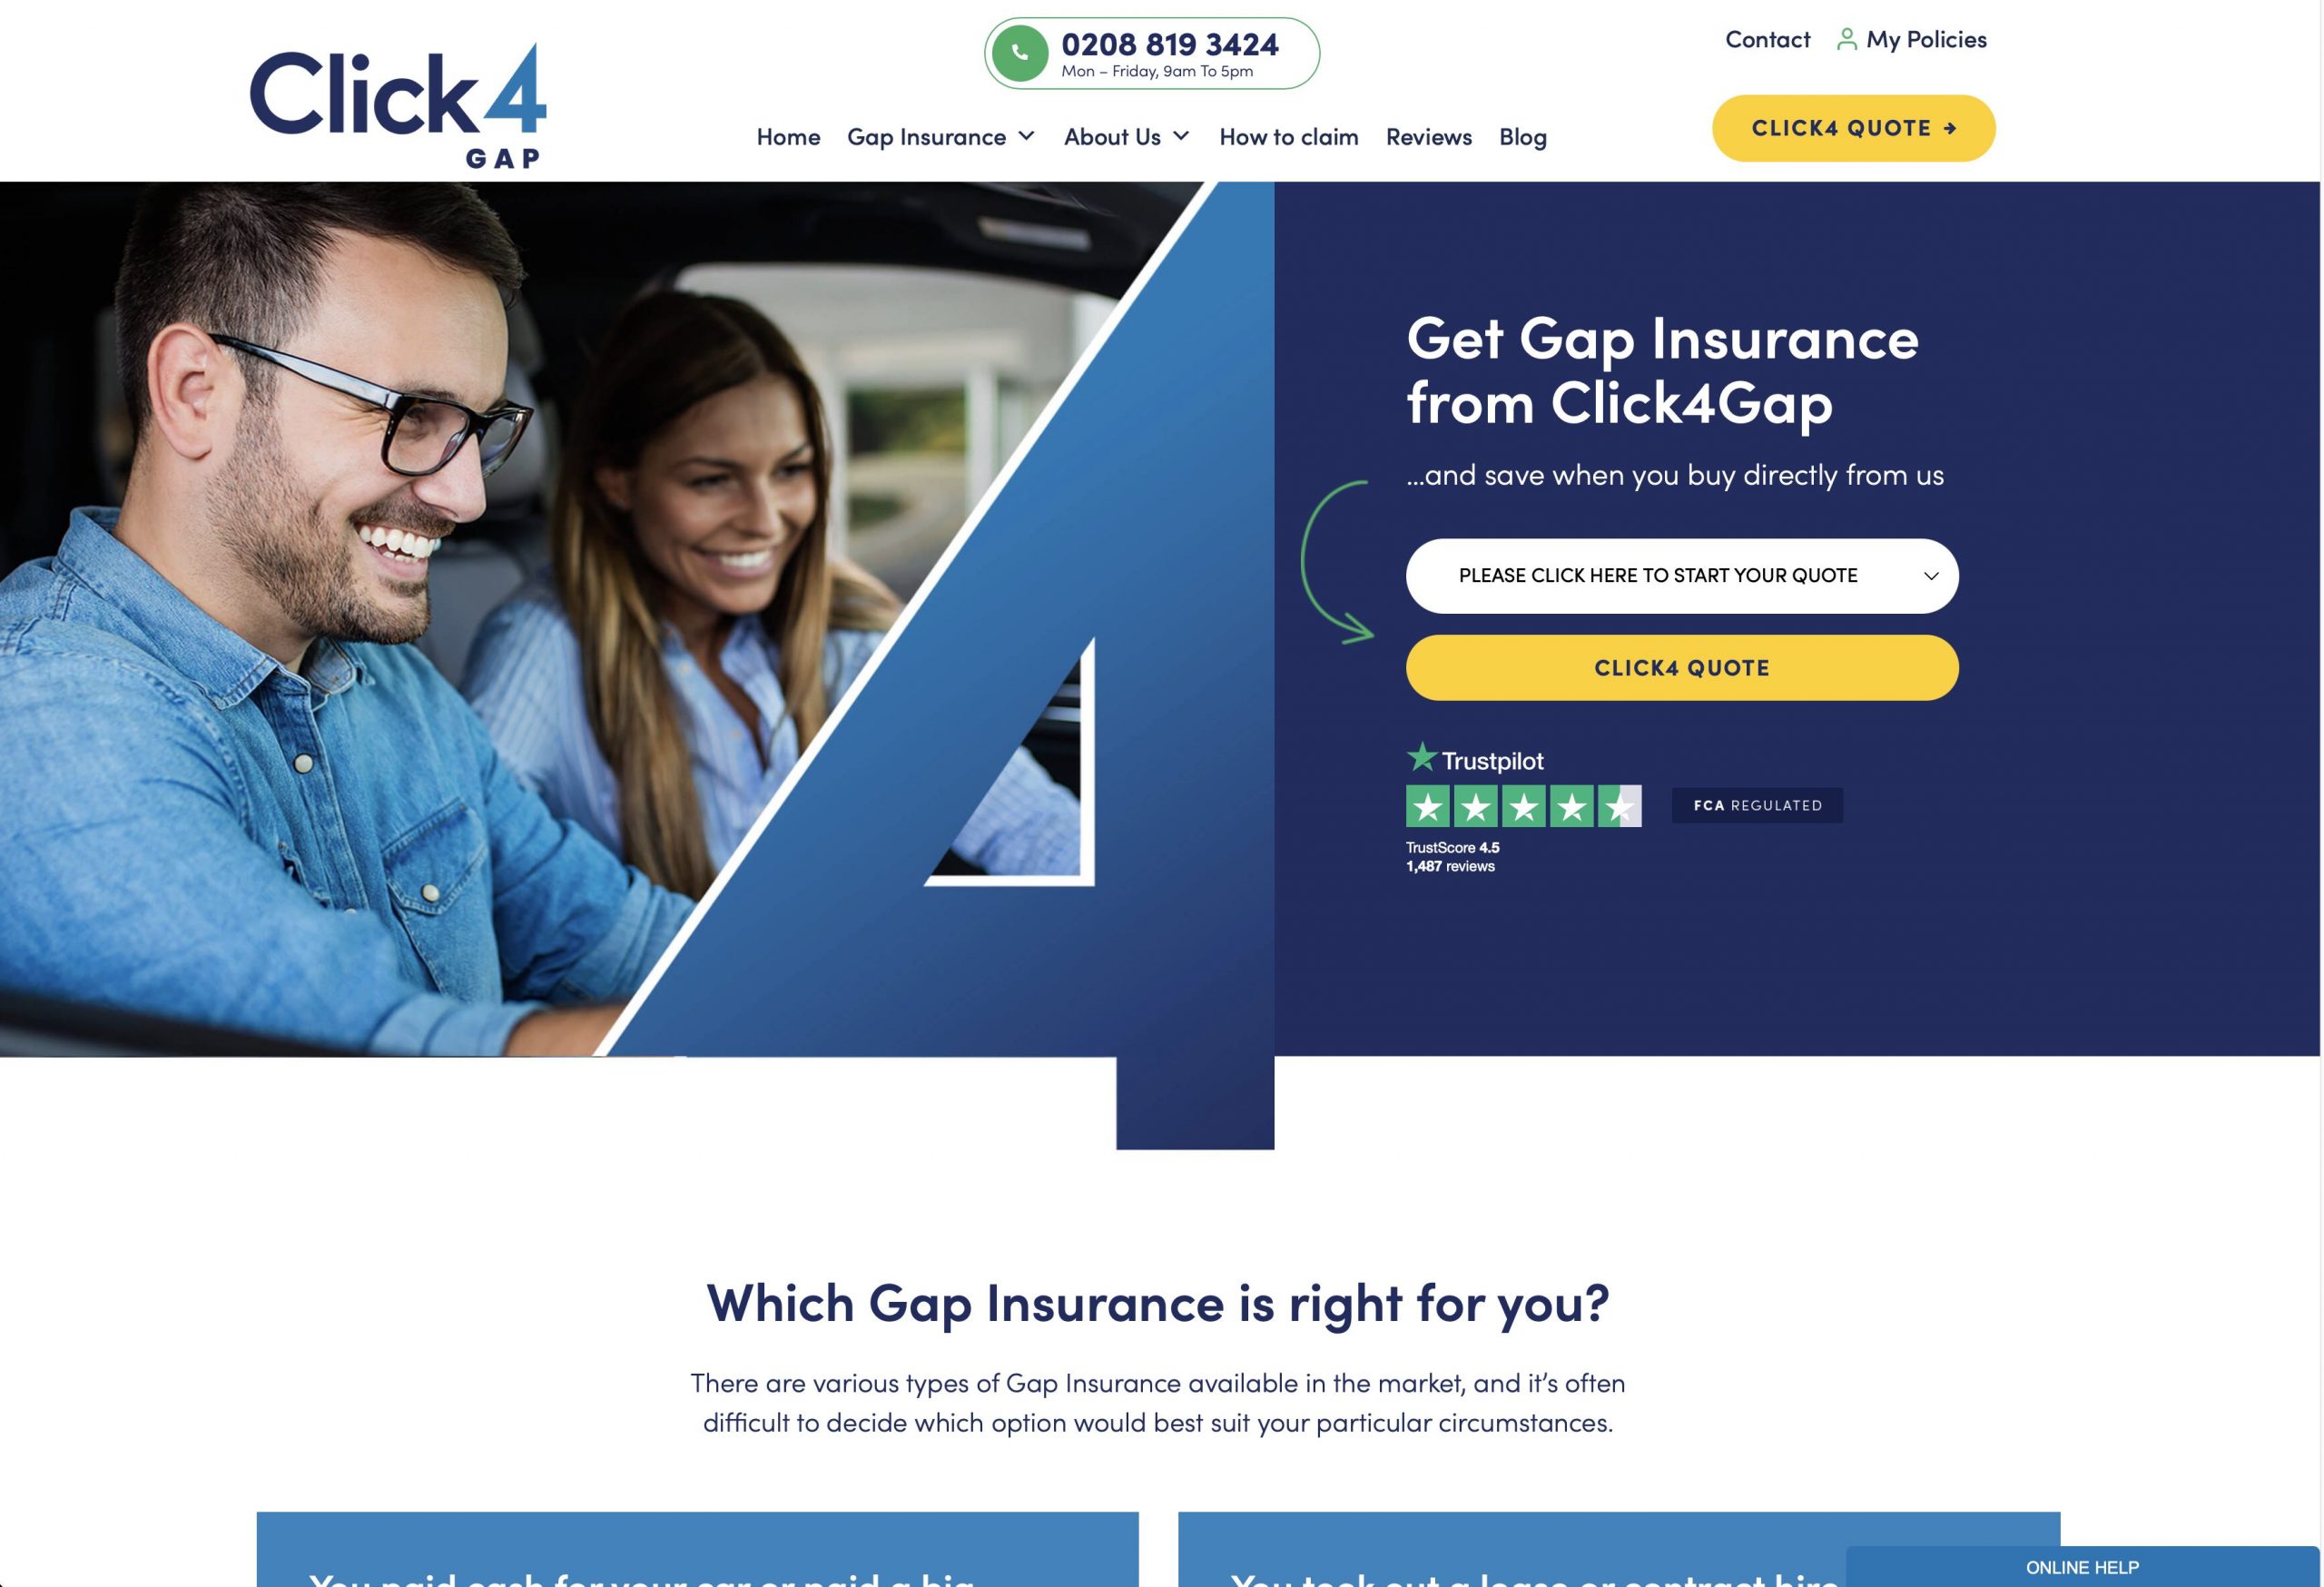 click4gap gap insurance